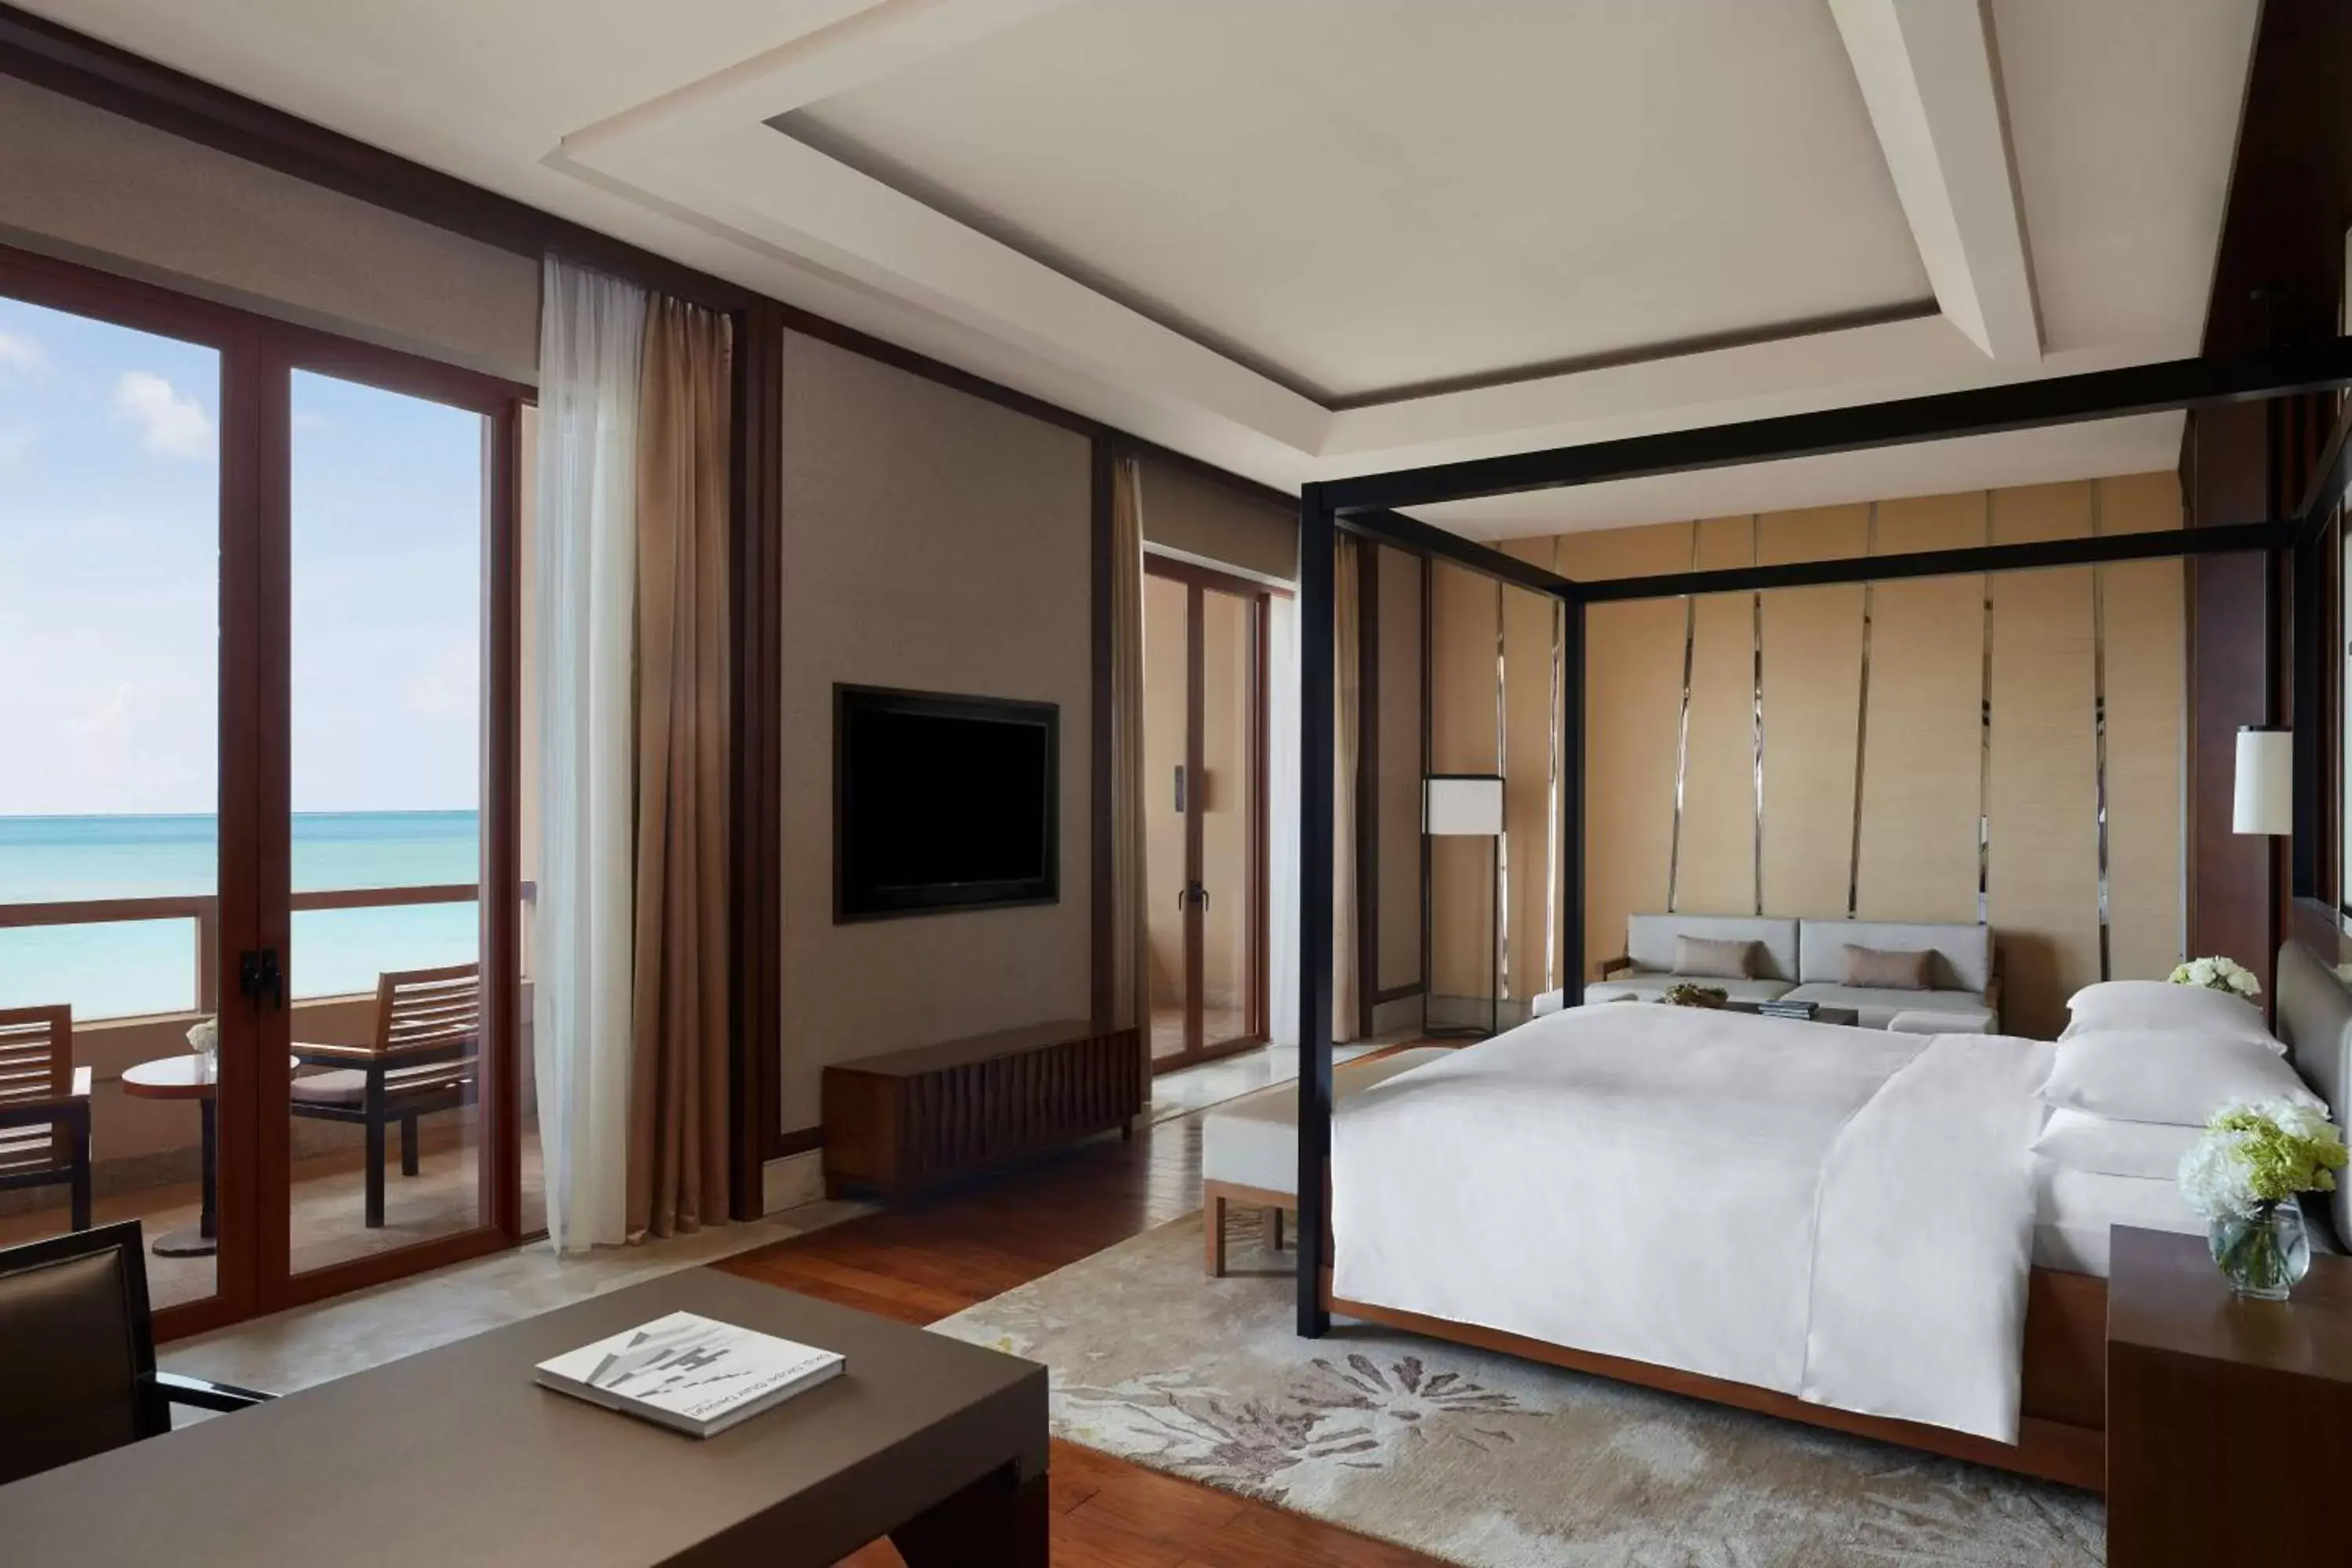 Bedroom in Haikou Marriott Hotel